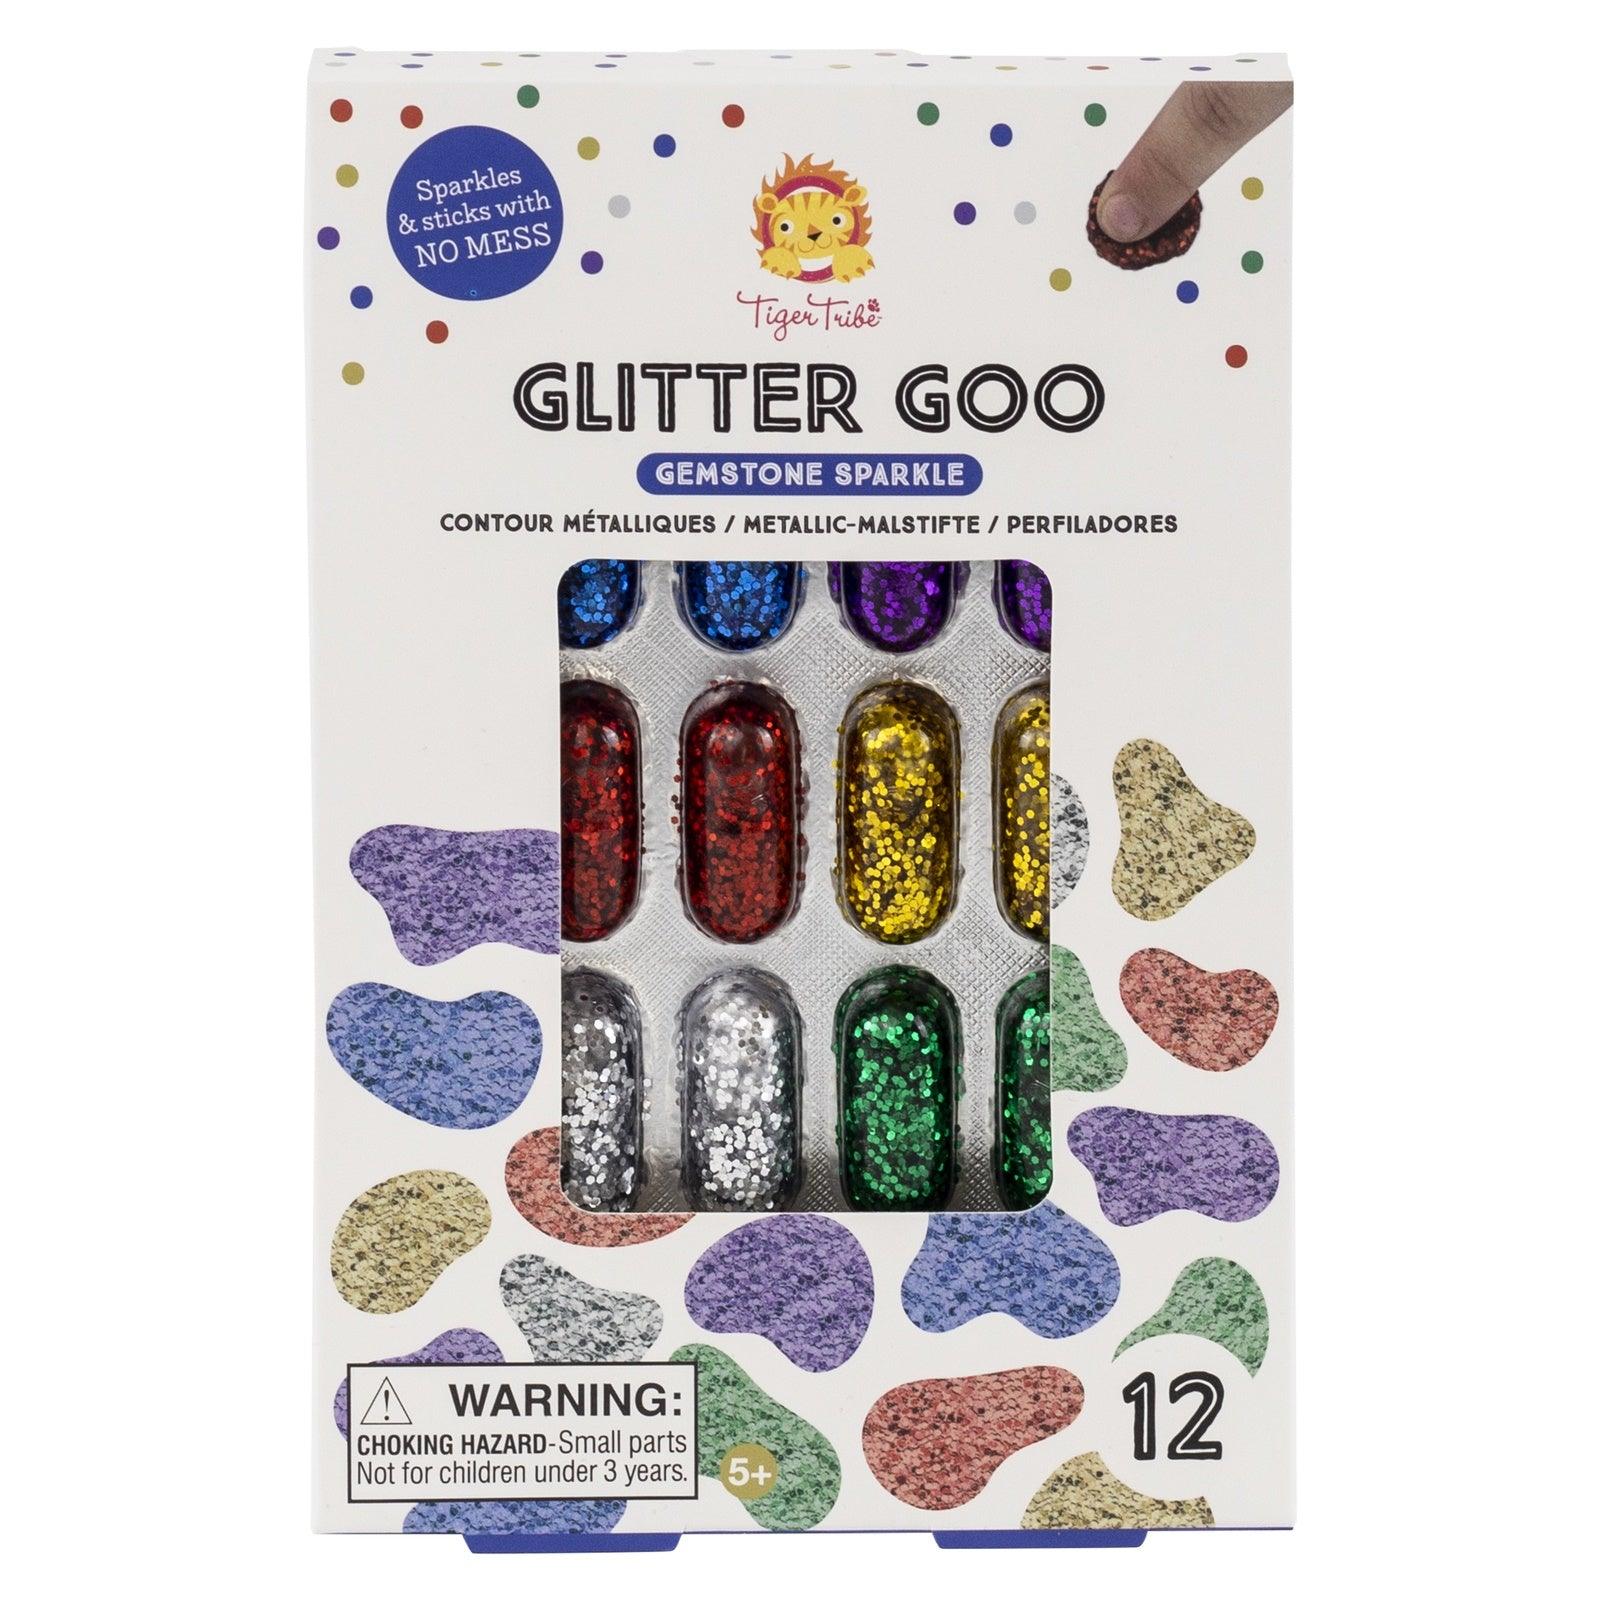 Glitter Goo - Gemstone Sparkle - Handworks Nouveau Paperie